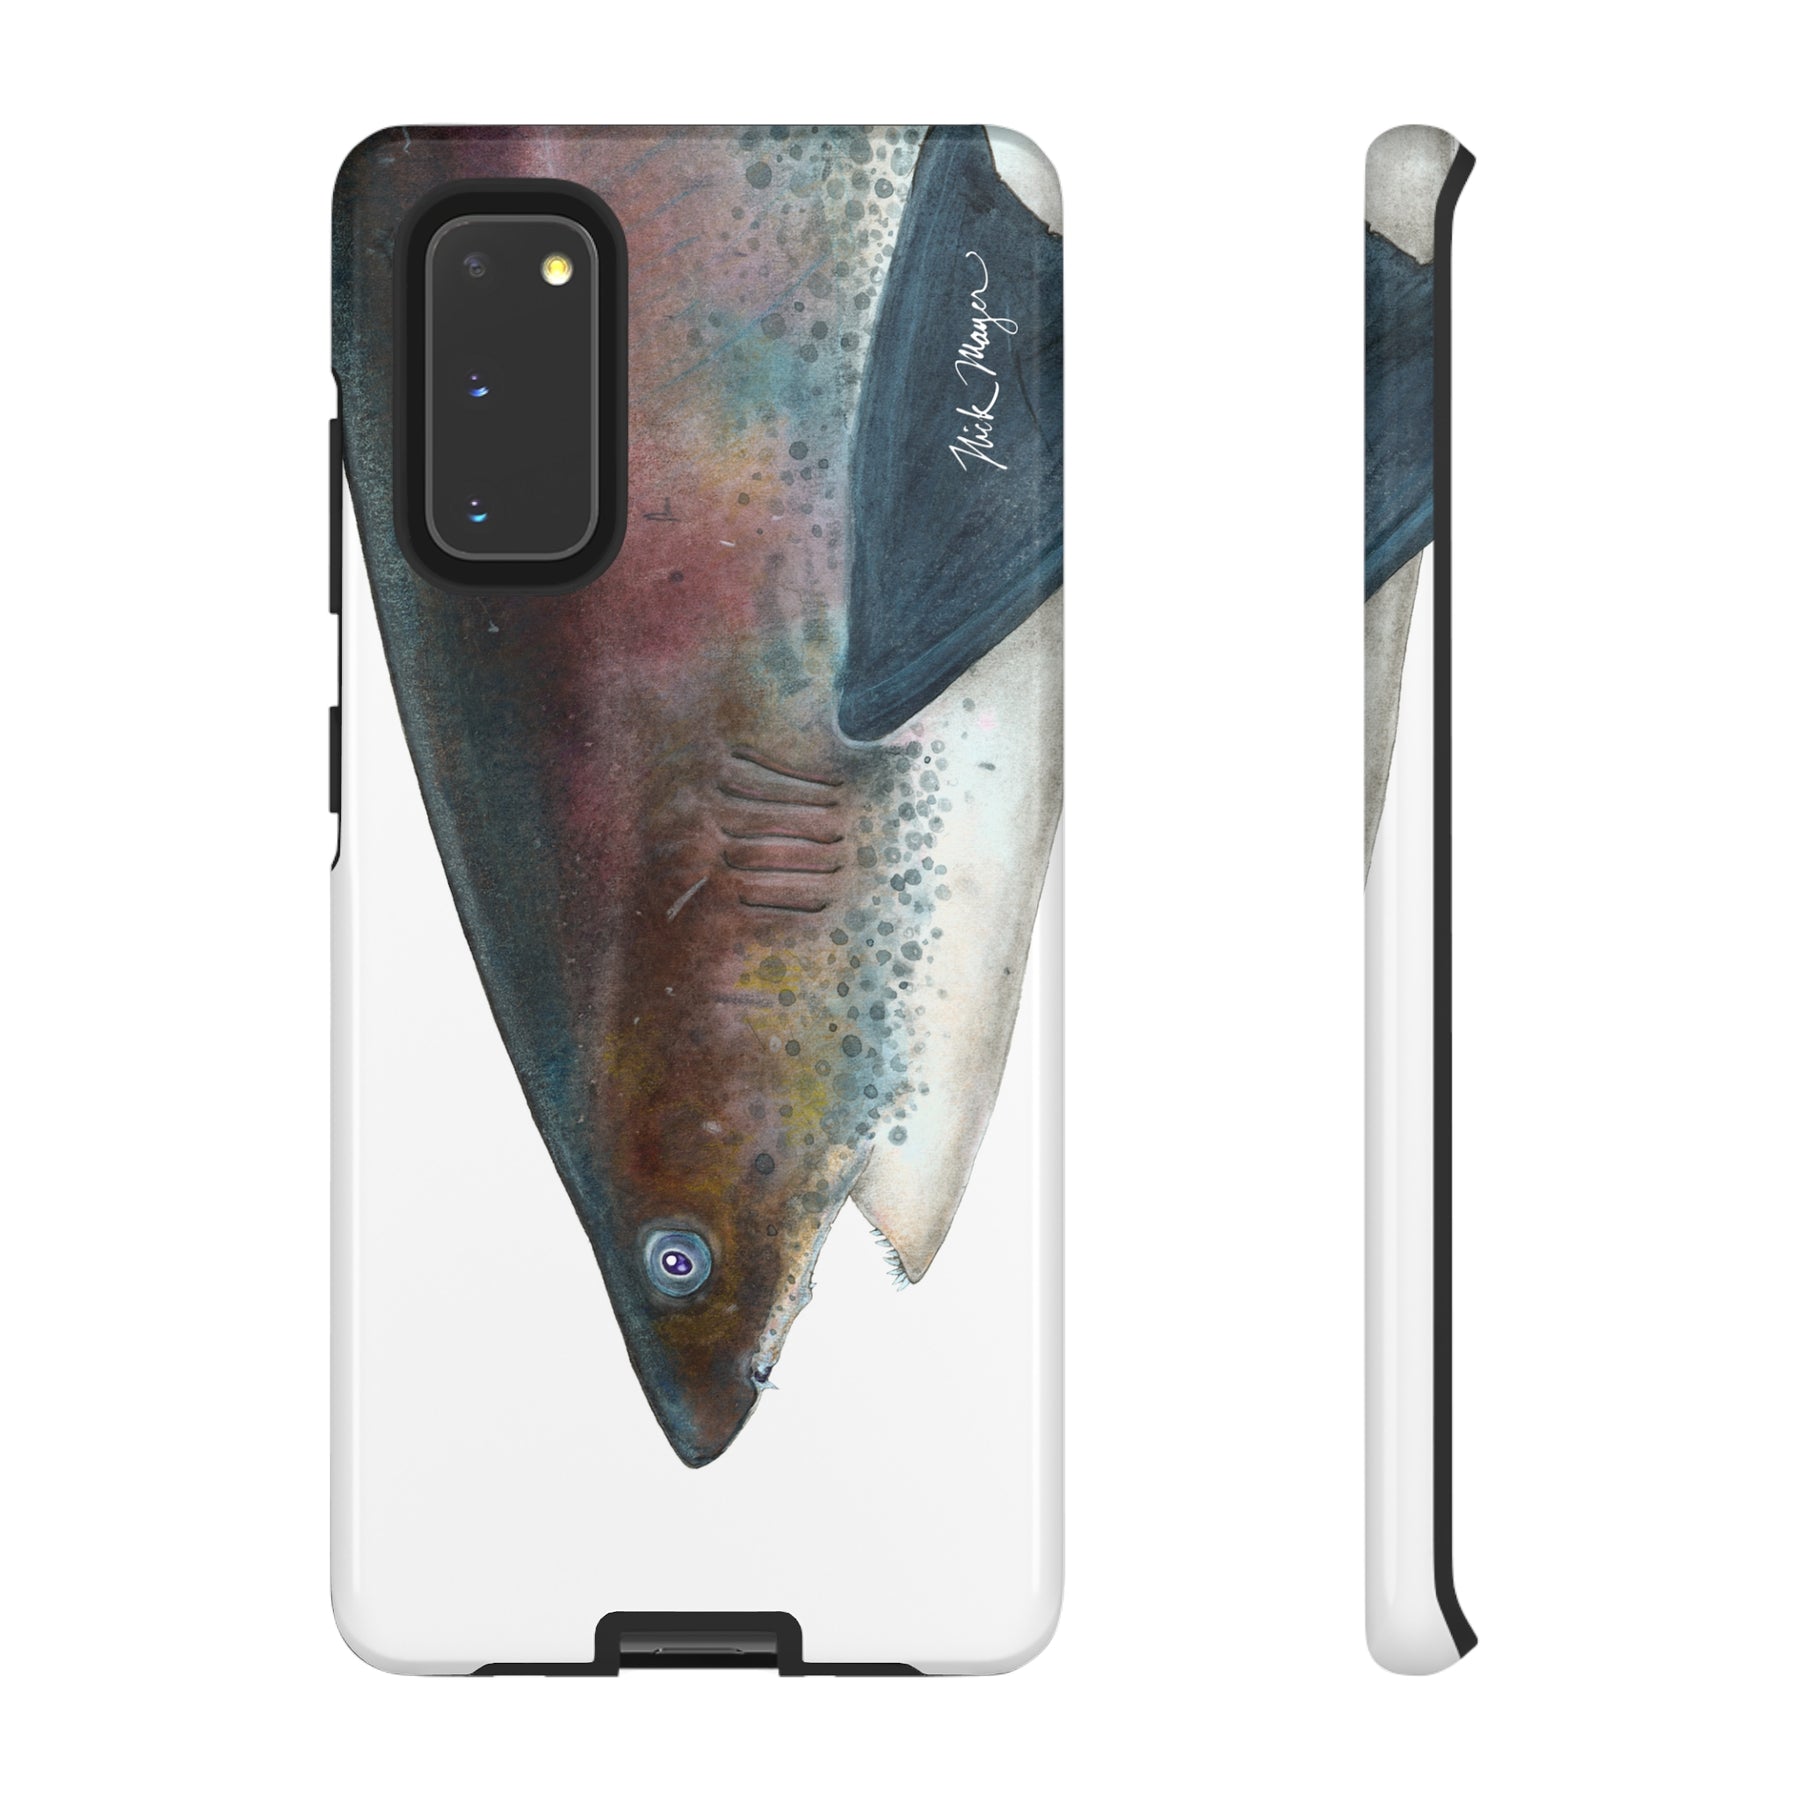 Thresher Shark Face Phone Case (Samsung)